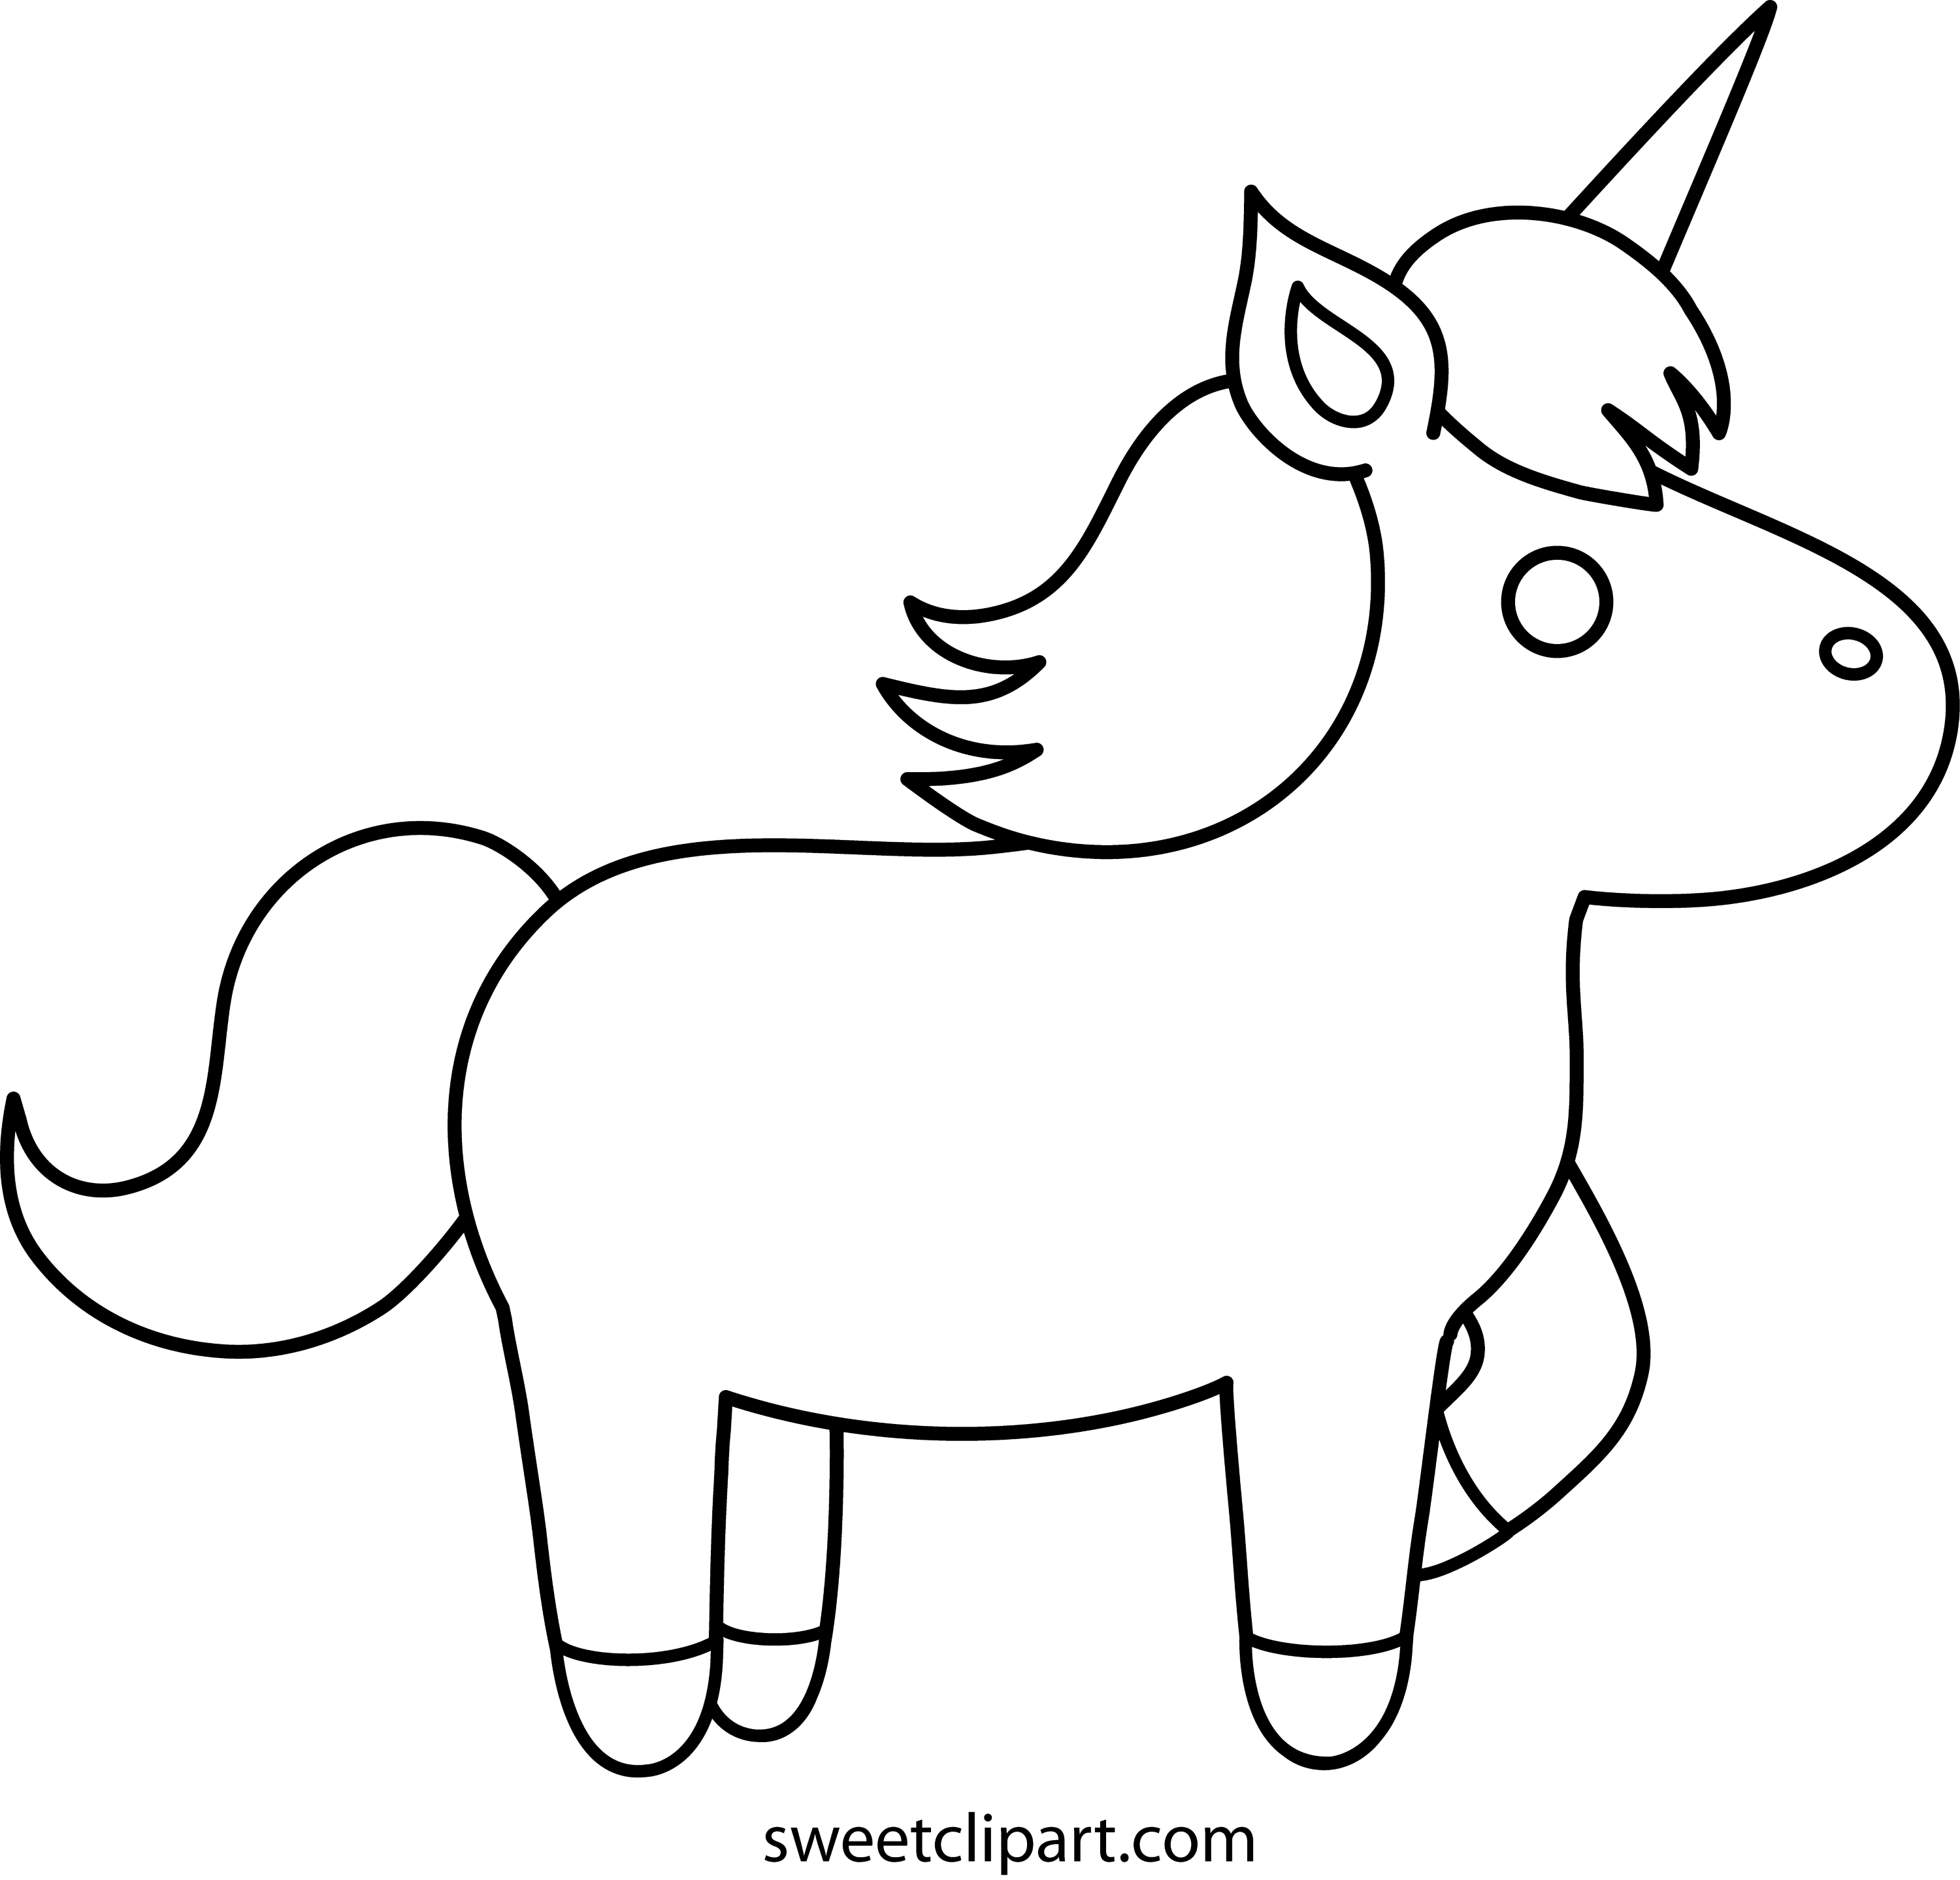 Cute Unicorn Coloring Page - Free Clip Art